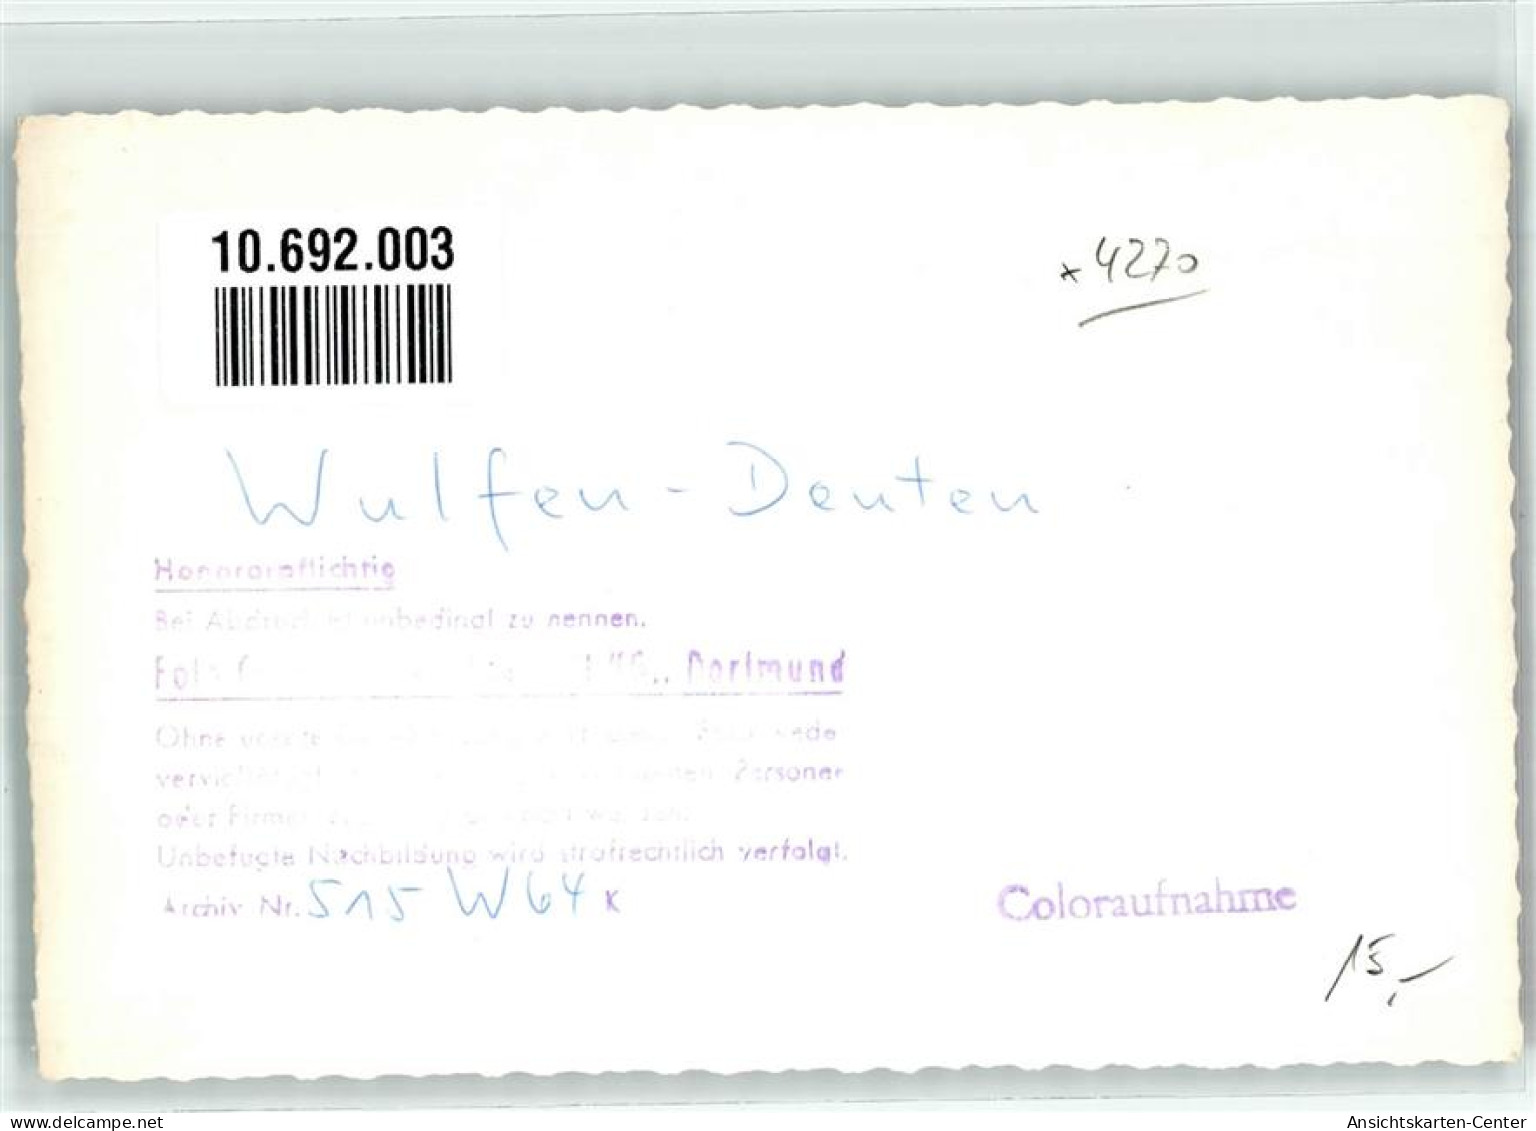 10692003 - Wulfen , Westf - Dorsten